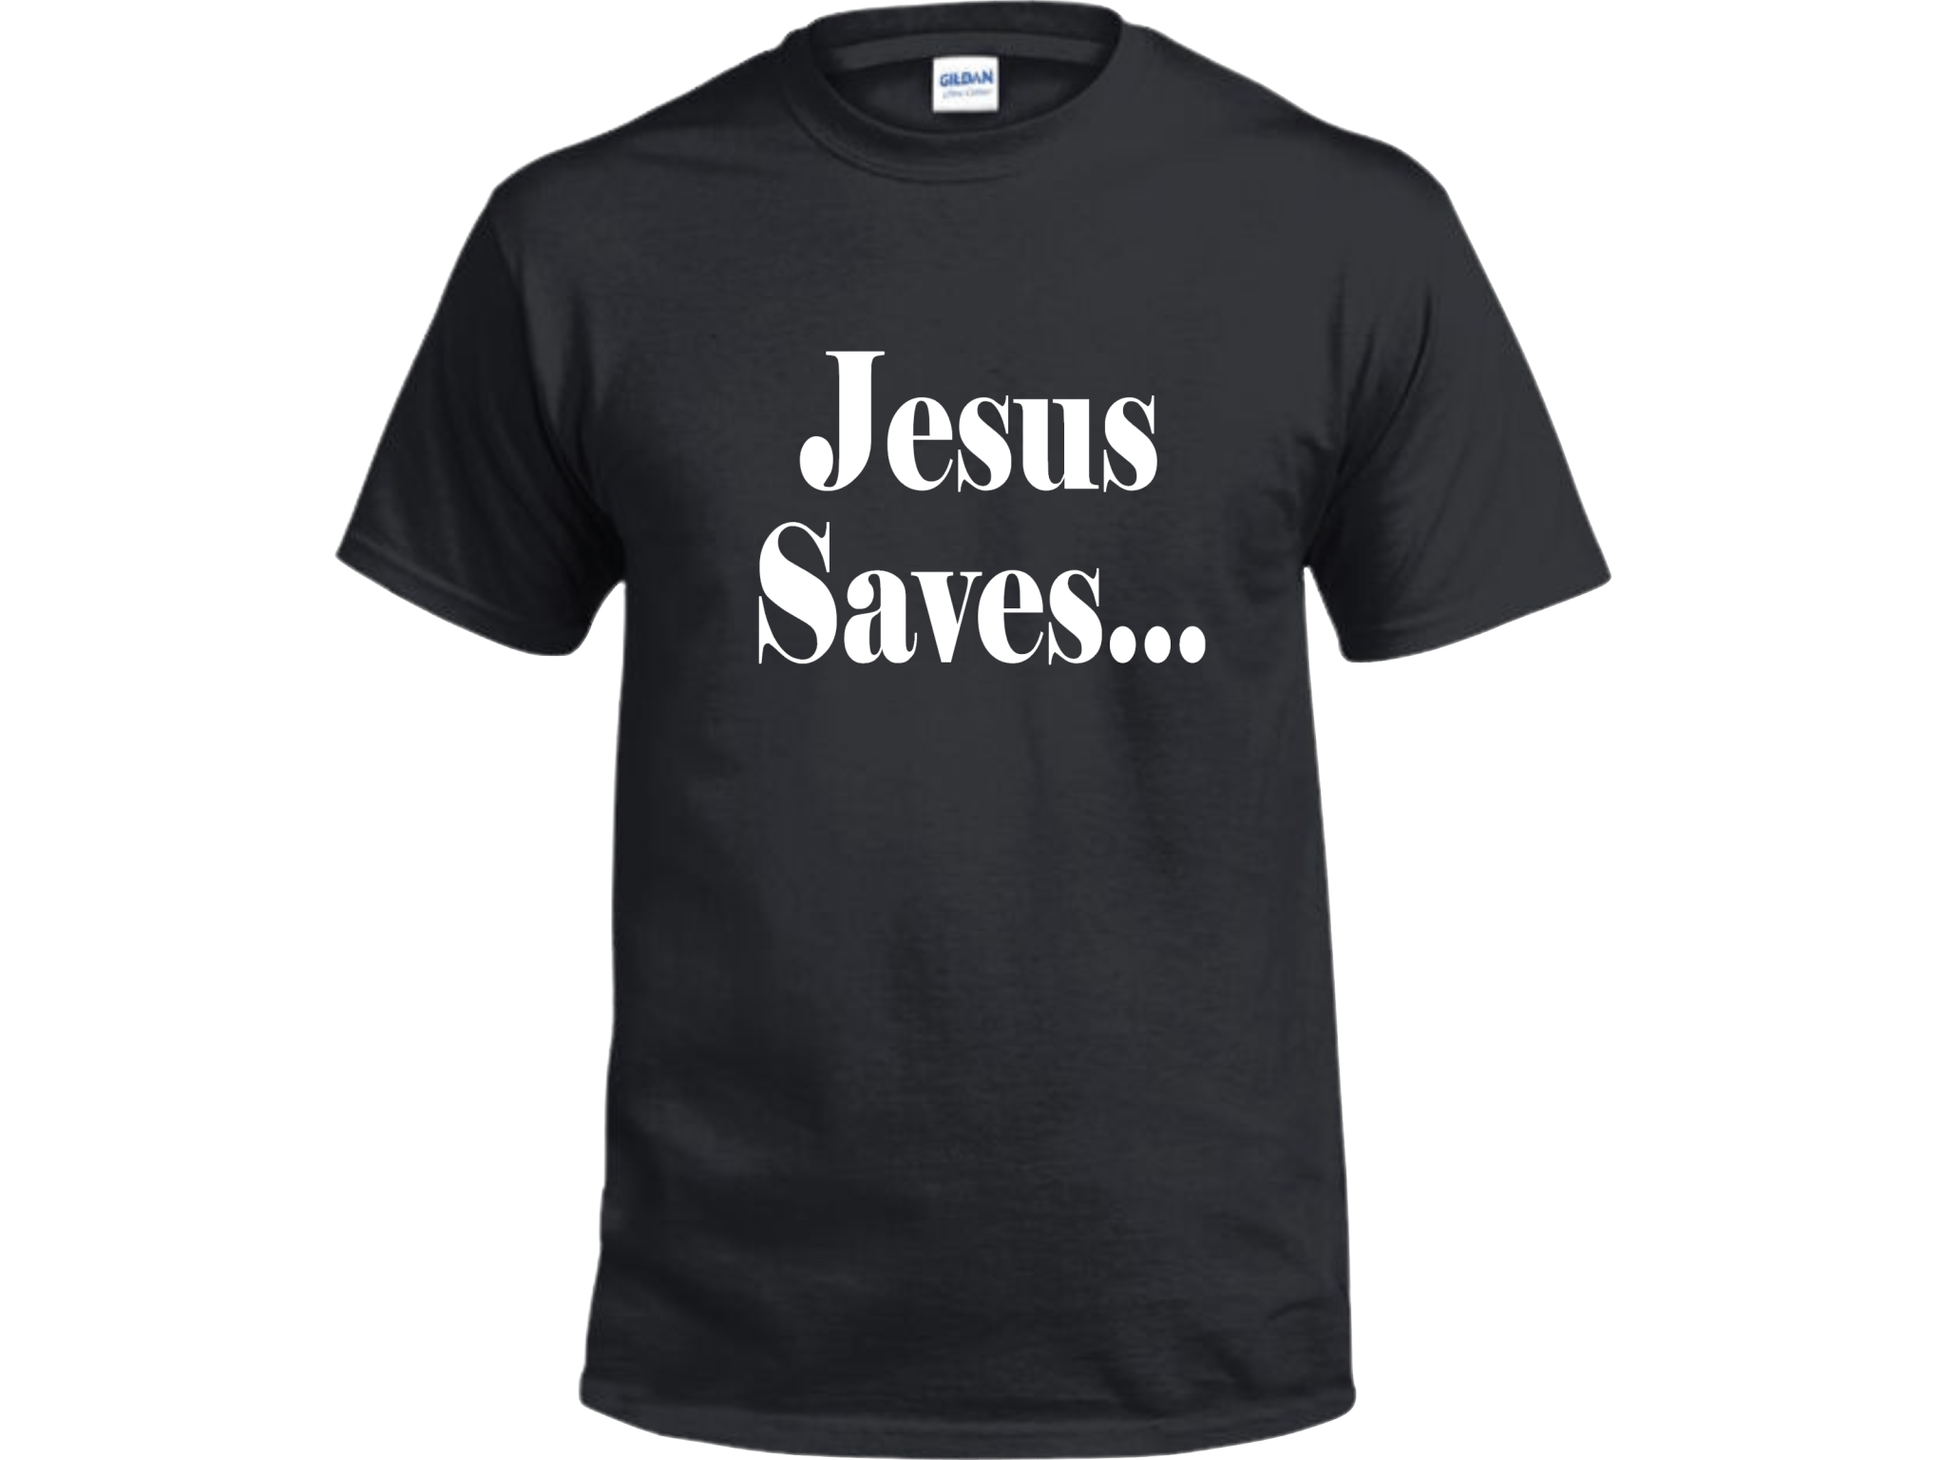 Jesus Saves Shirt, Religious Shirt for Women and Men, Jesus Gift, Religious Gift, Christian Shirt, - smuniqueshirts